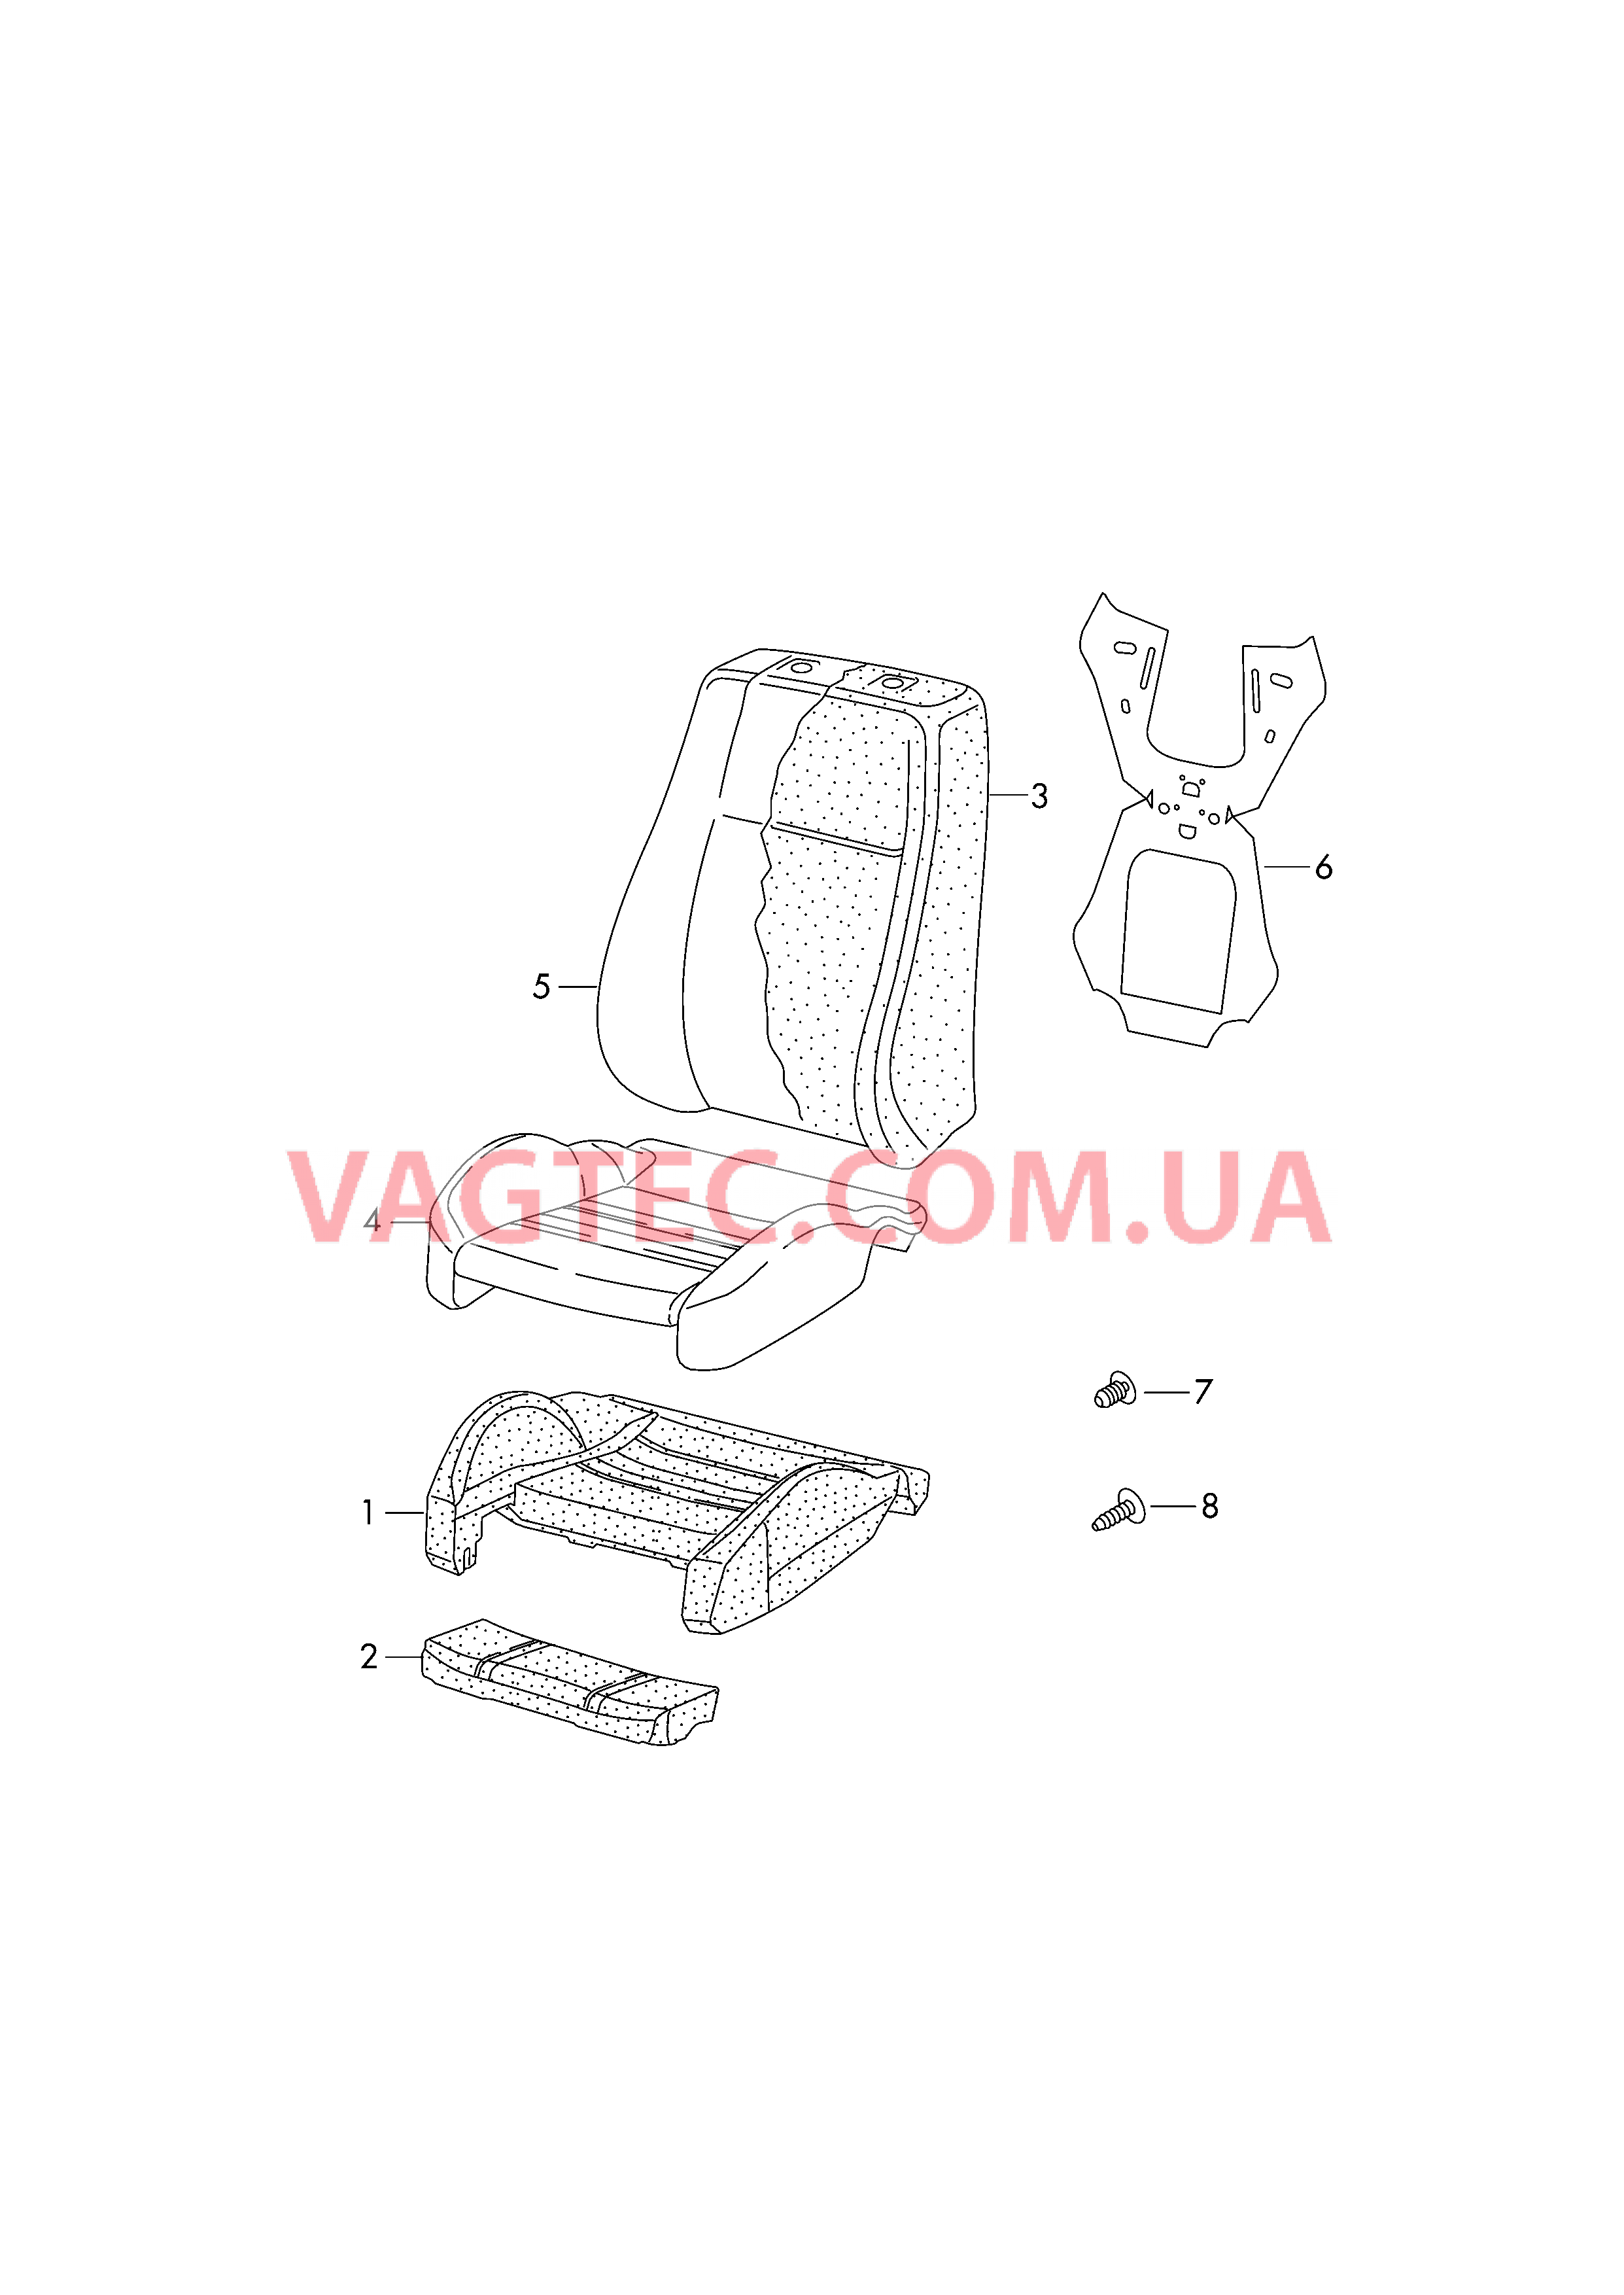 Подушка сиденья Набивка спинки Обивка подушки и спинки сиден.  для AUDI Q5 2018